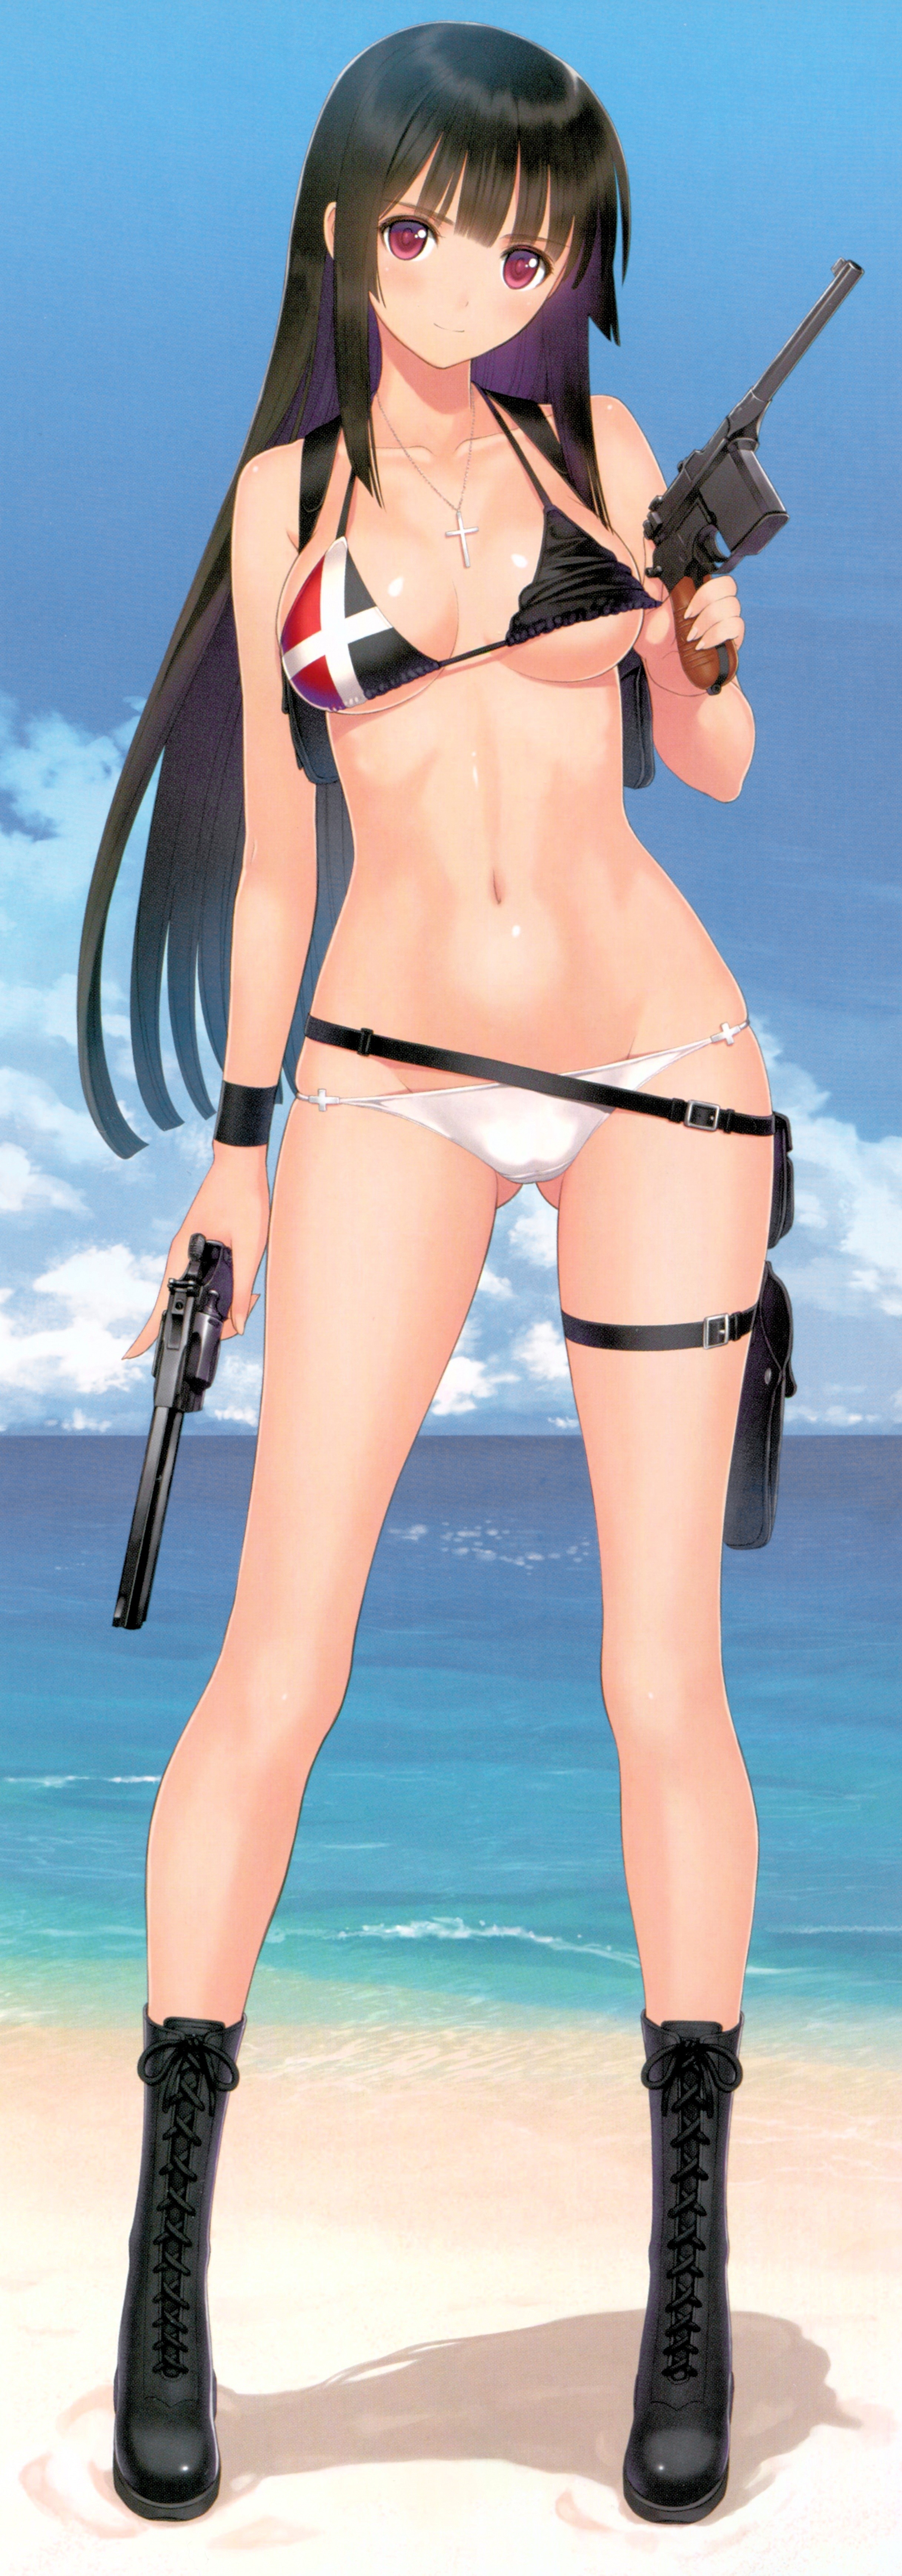 Anime 2434x6955 Tony Taka cleavage bikini anime girls